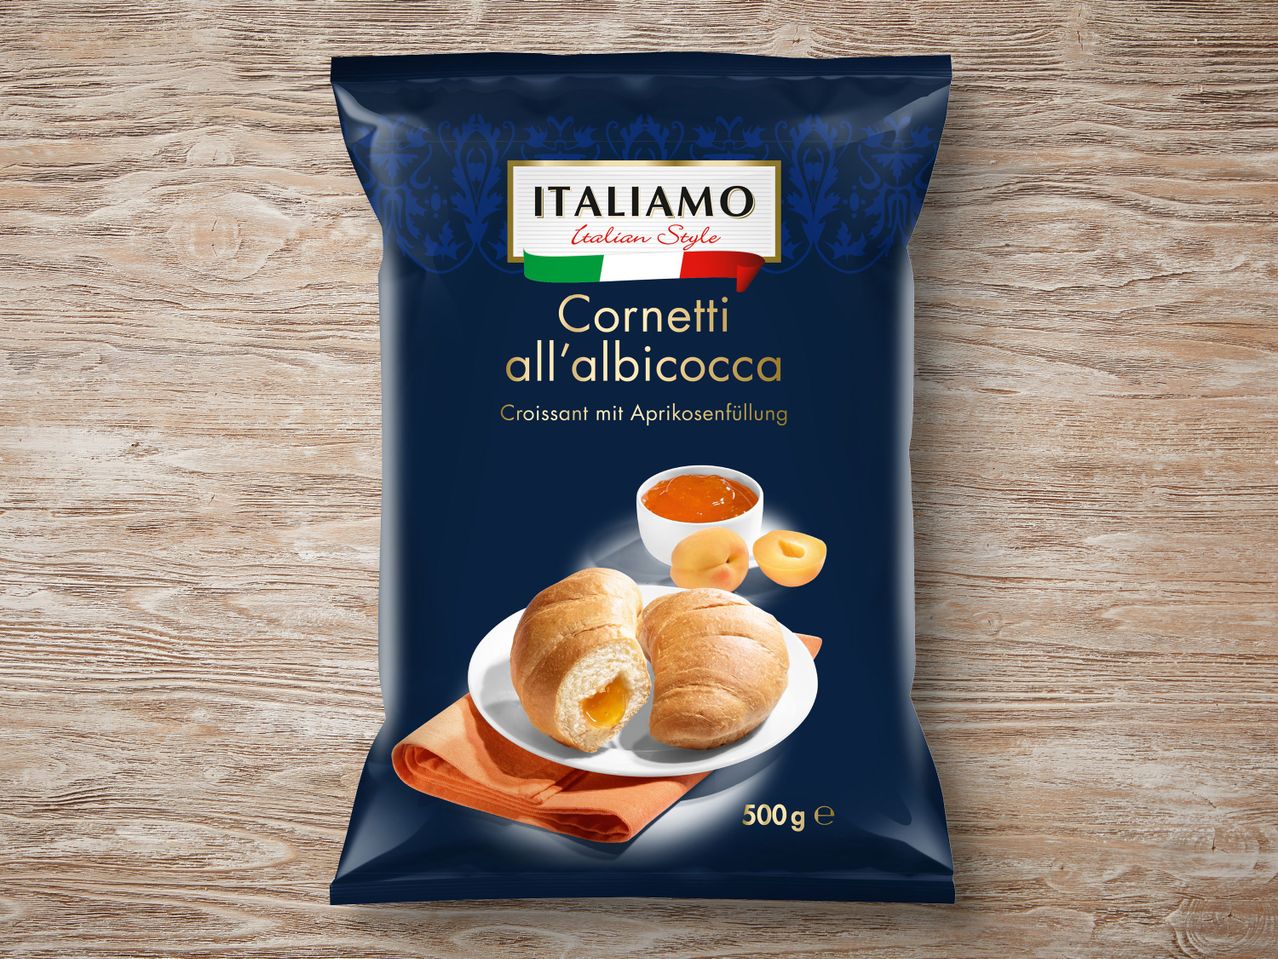 Füllung Croissants Italiamo mit